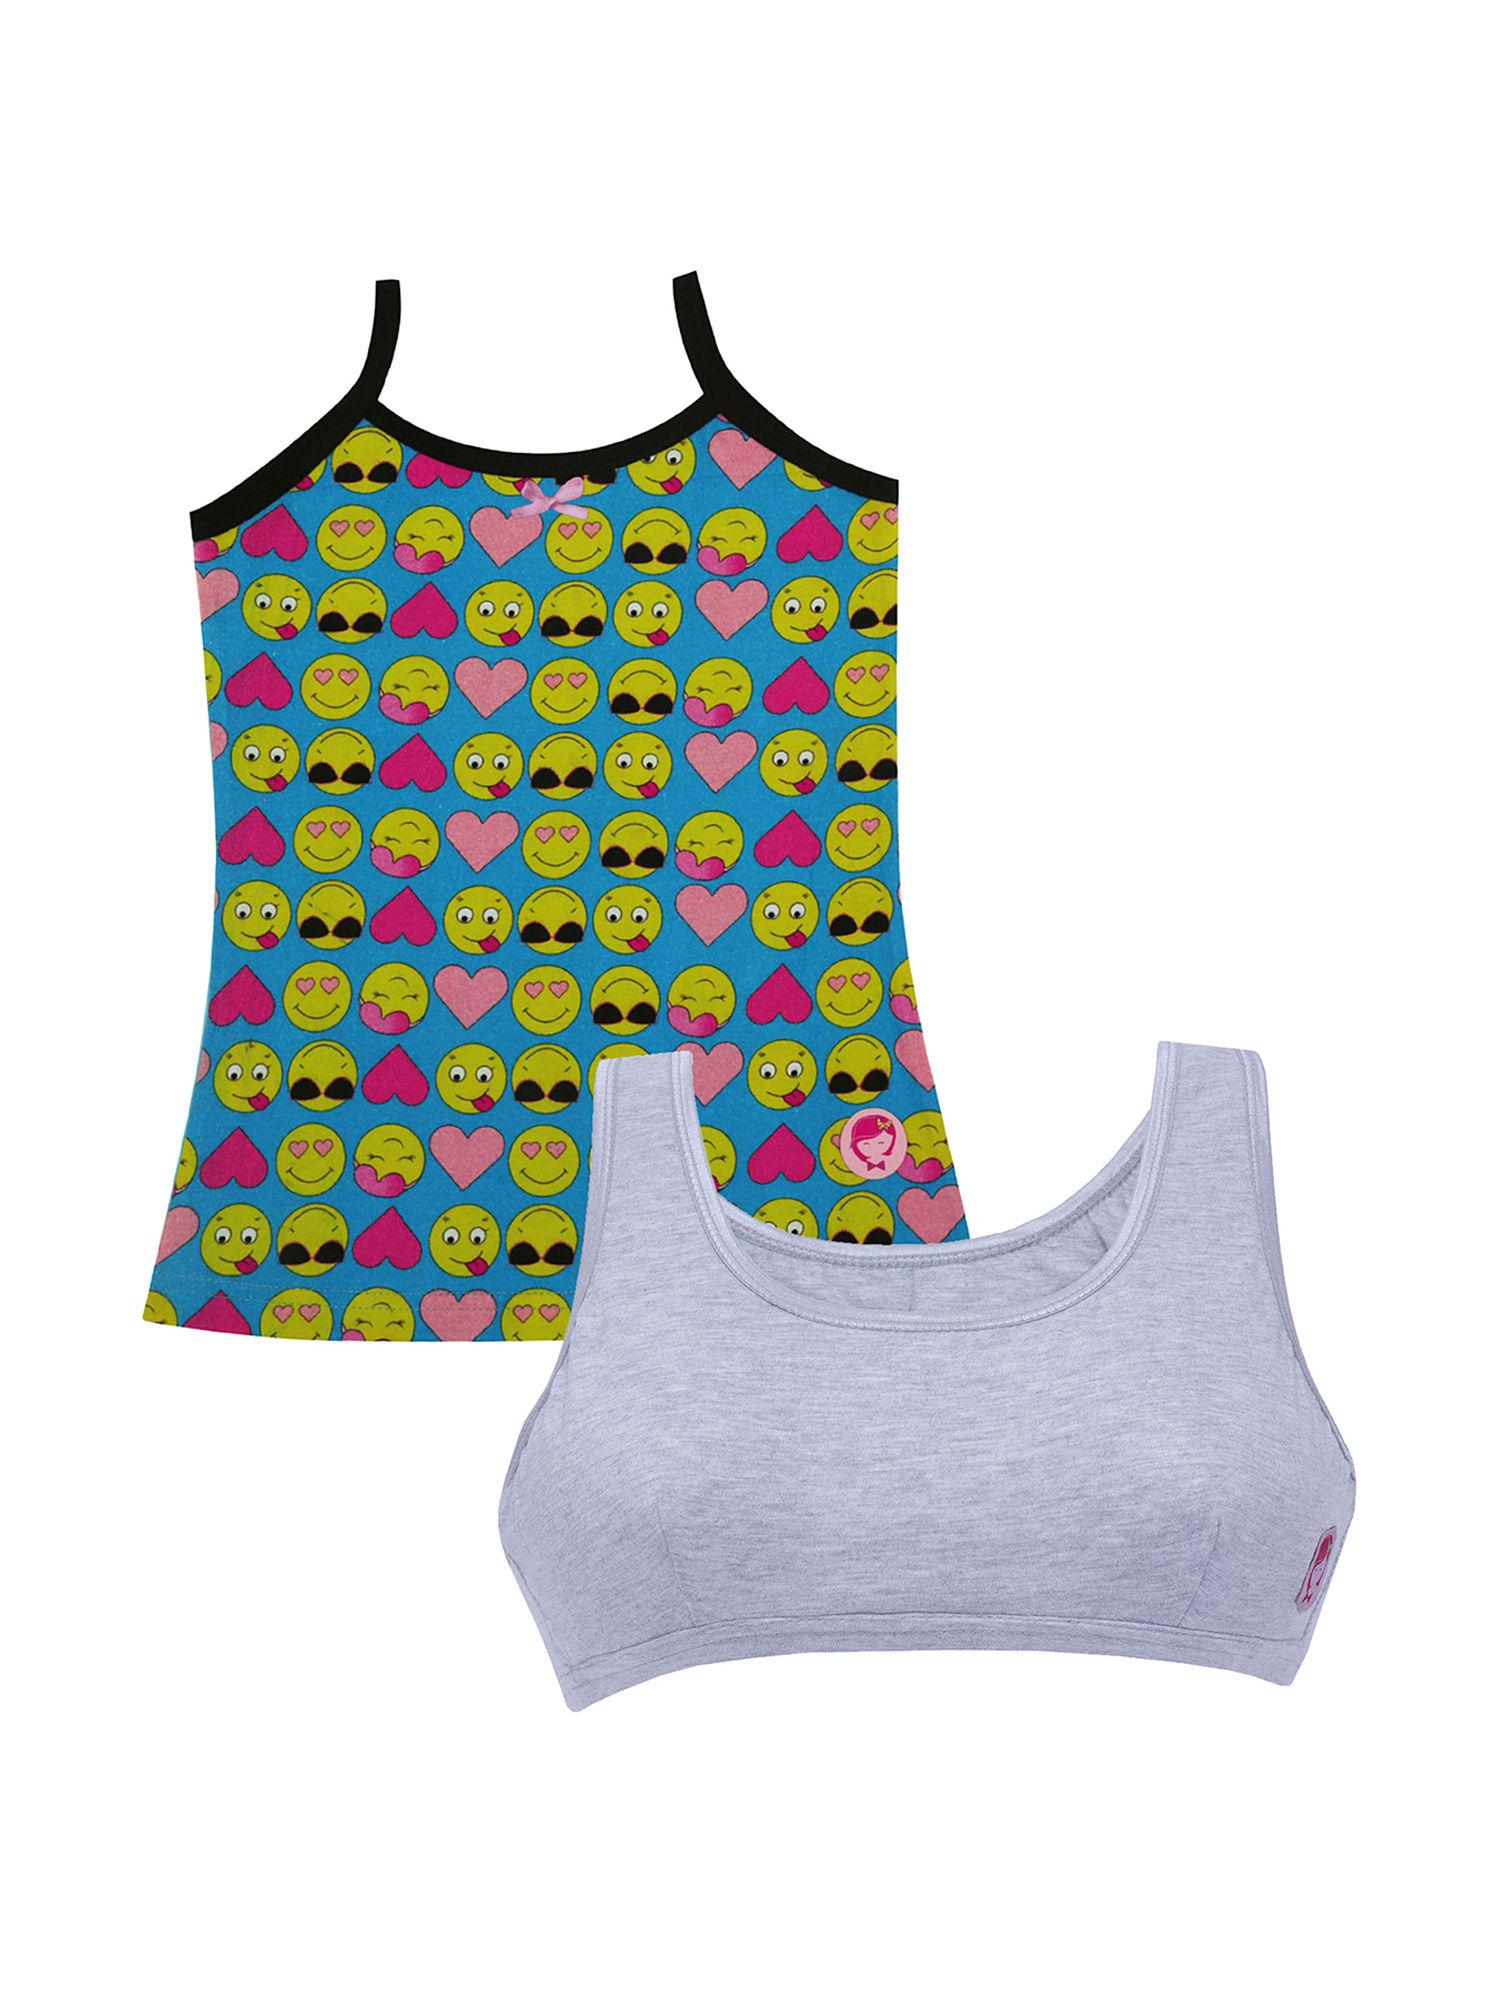 pack of 2 grey beginner bra and smiley print camisole-slip for girls